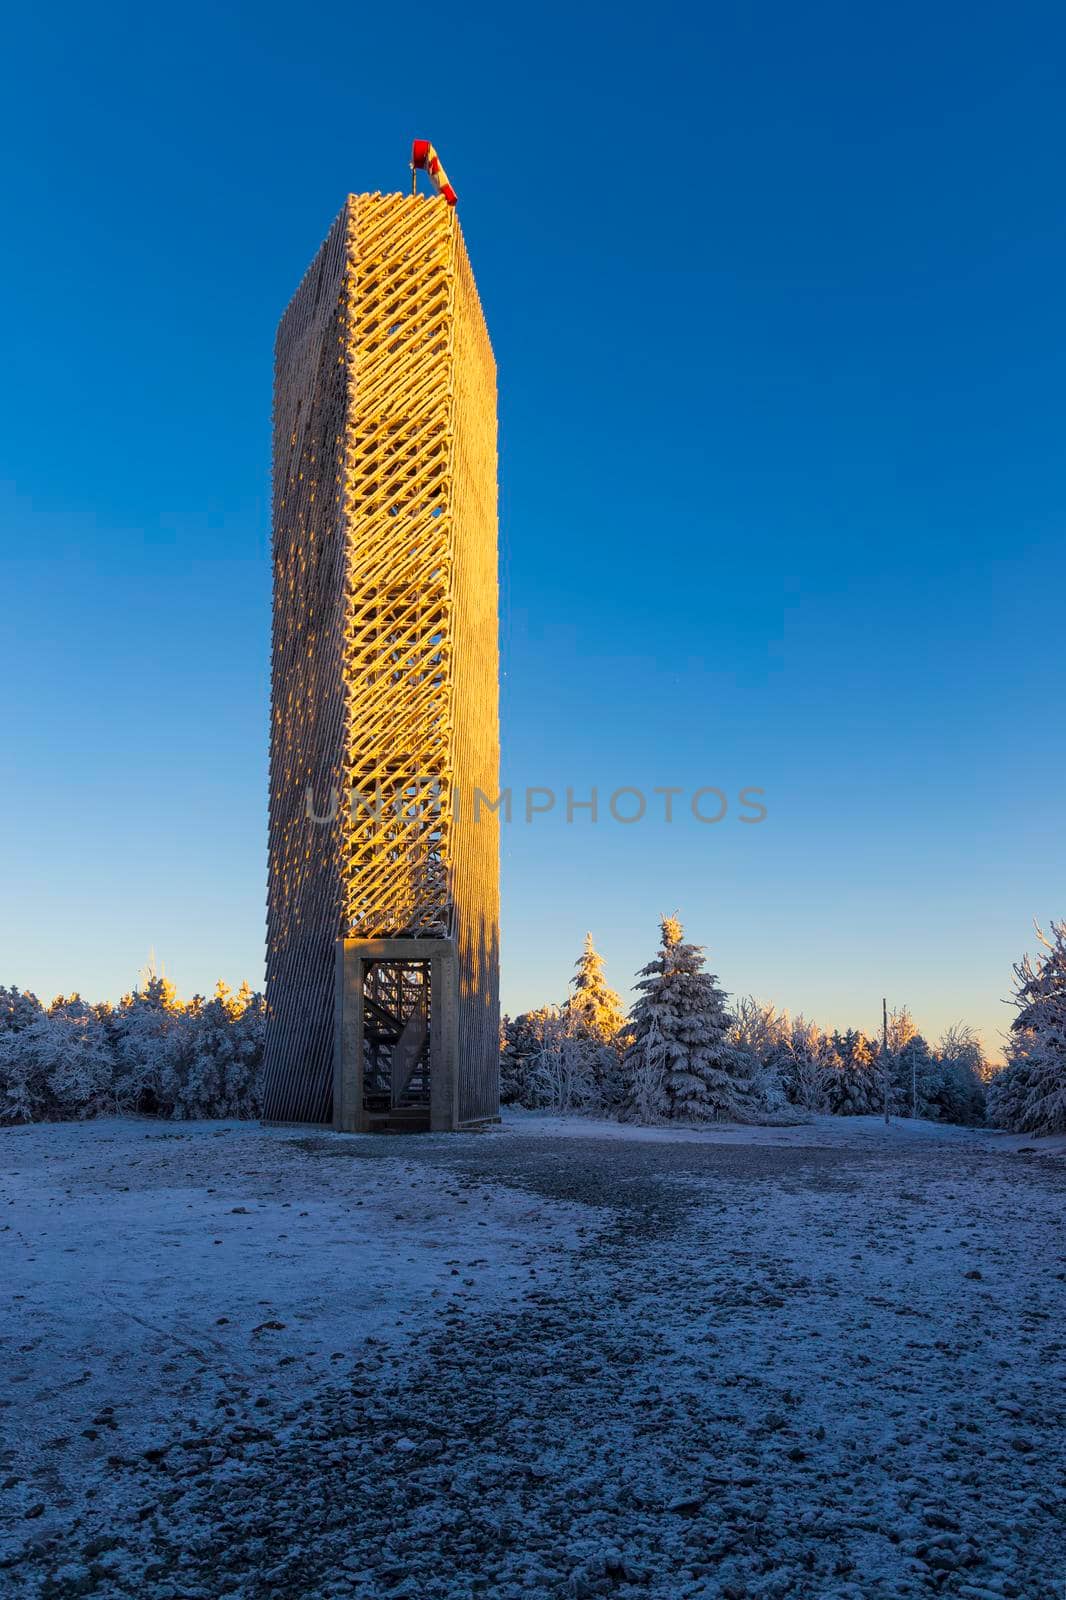 Lookout tower, Velka Destna, Orlicke mountains, Eastern Bohemia, Czech Republic by phbcz